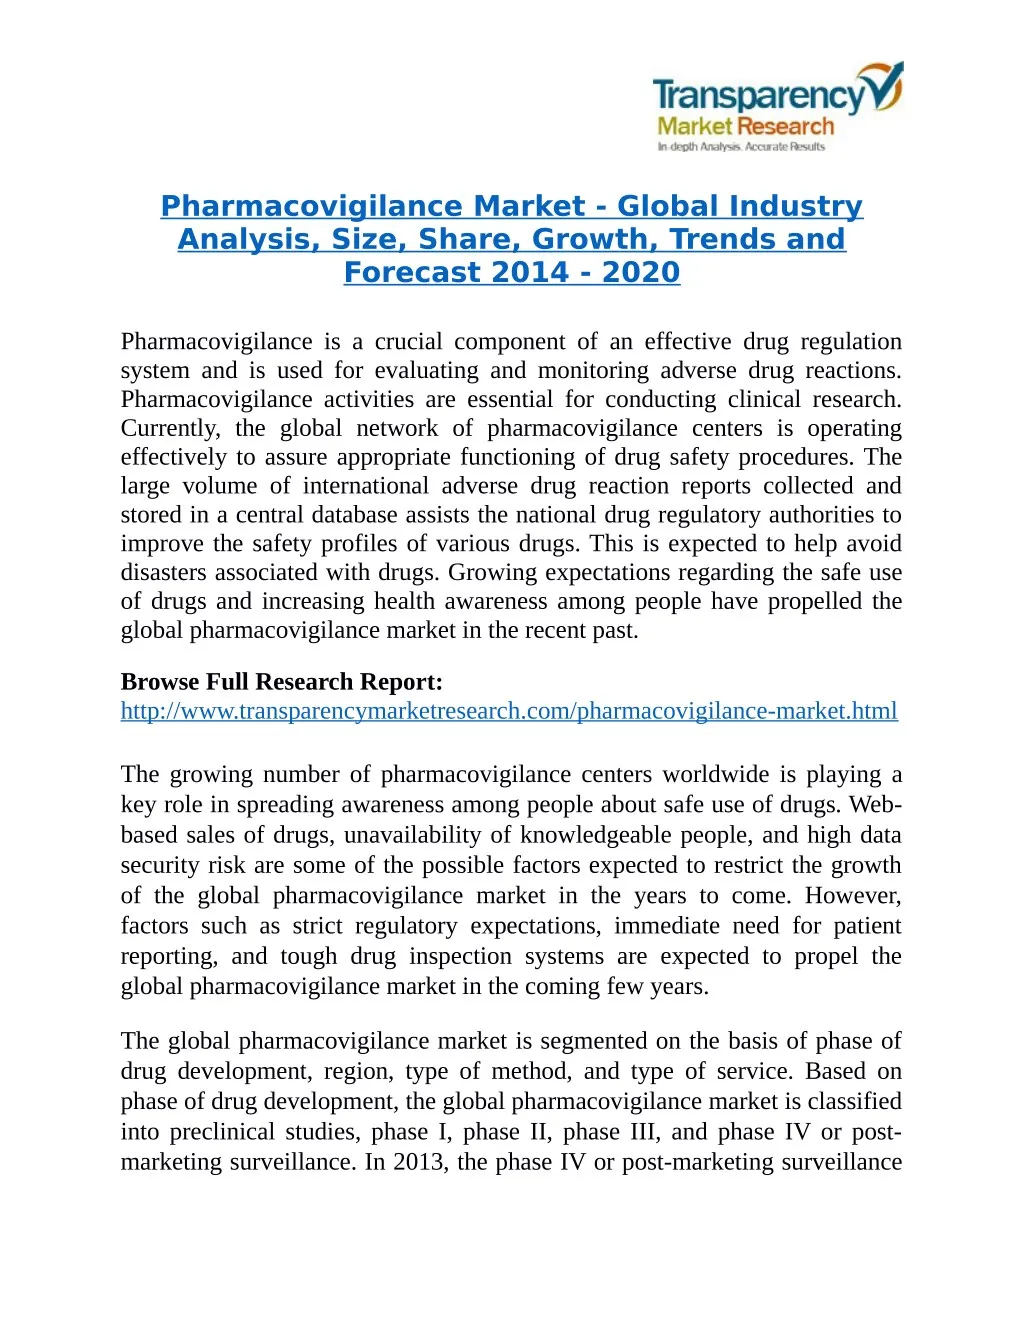 pharmacovigilance market global industry analysis